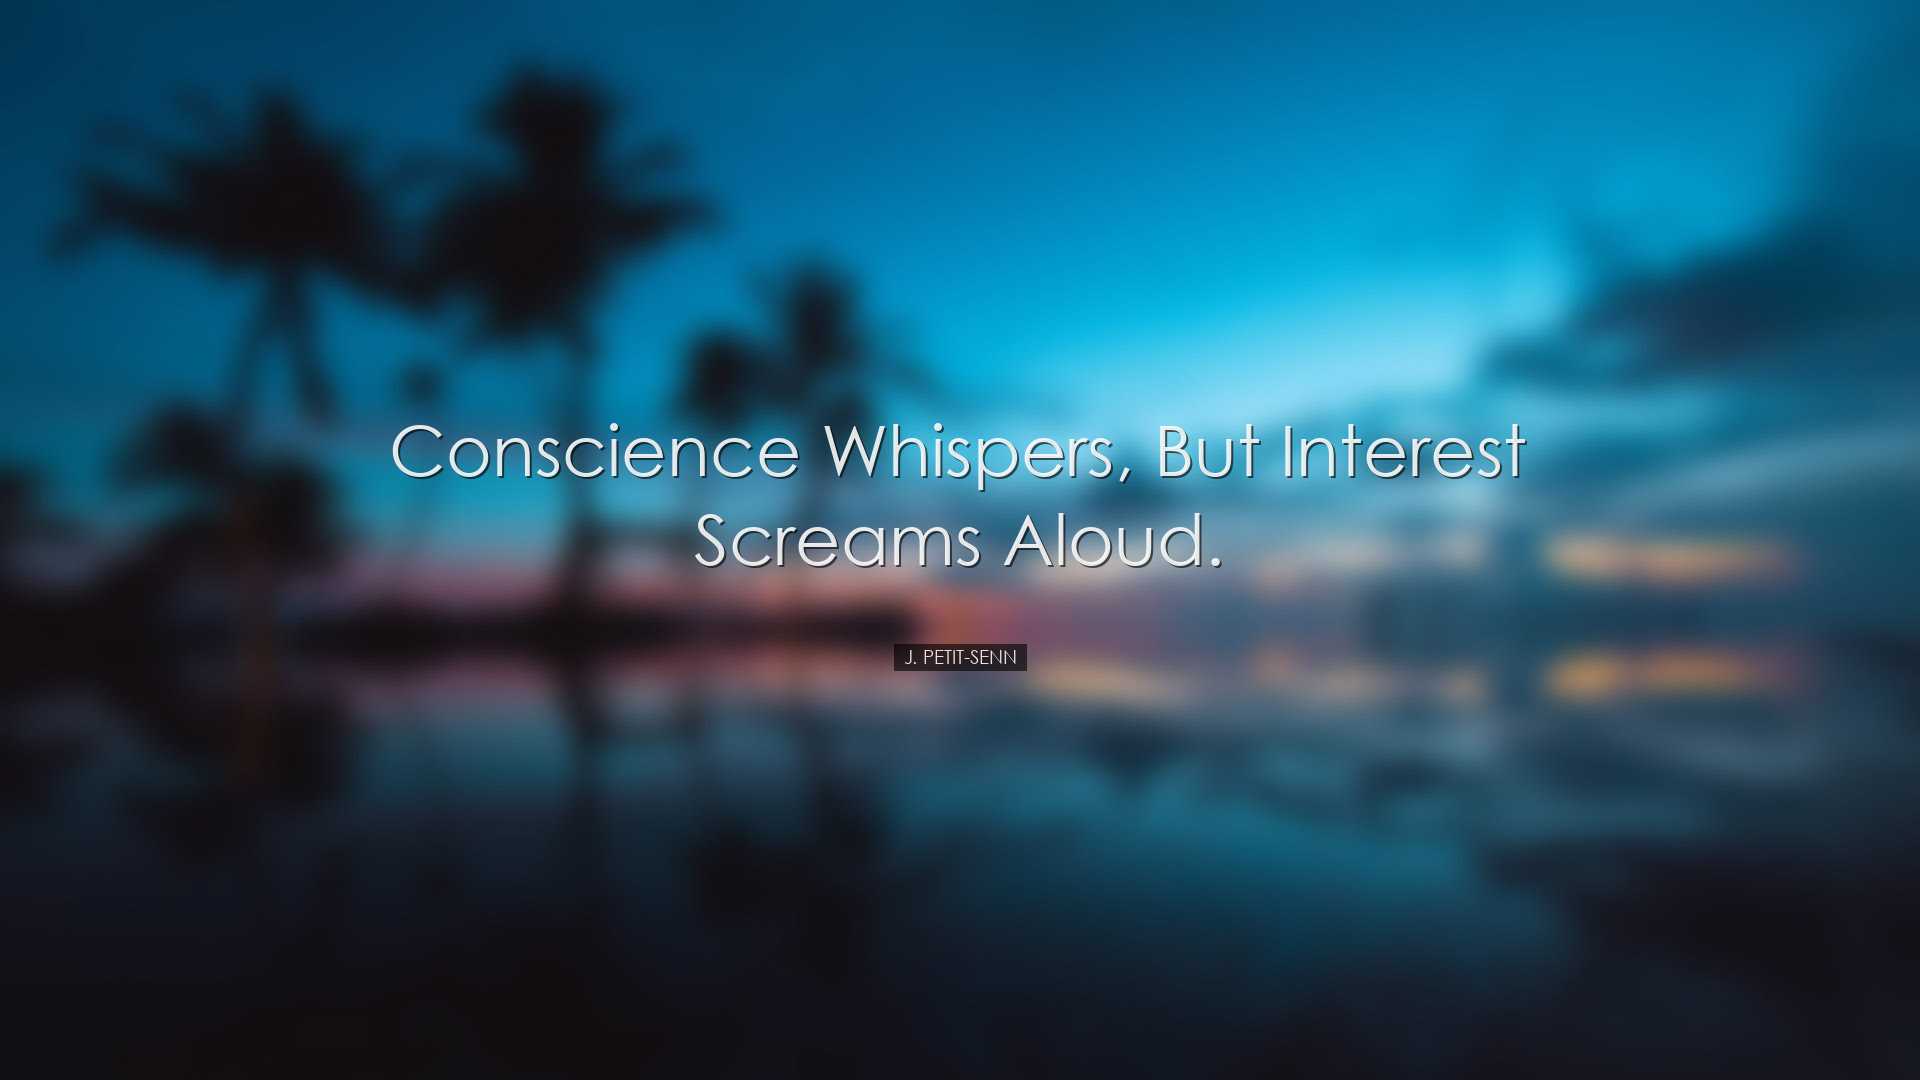 Conscience whispers, but interest screams aloud. - J. Petit-Senn